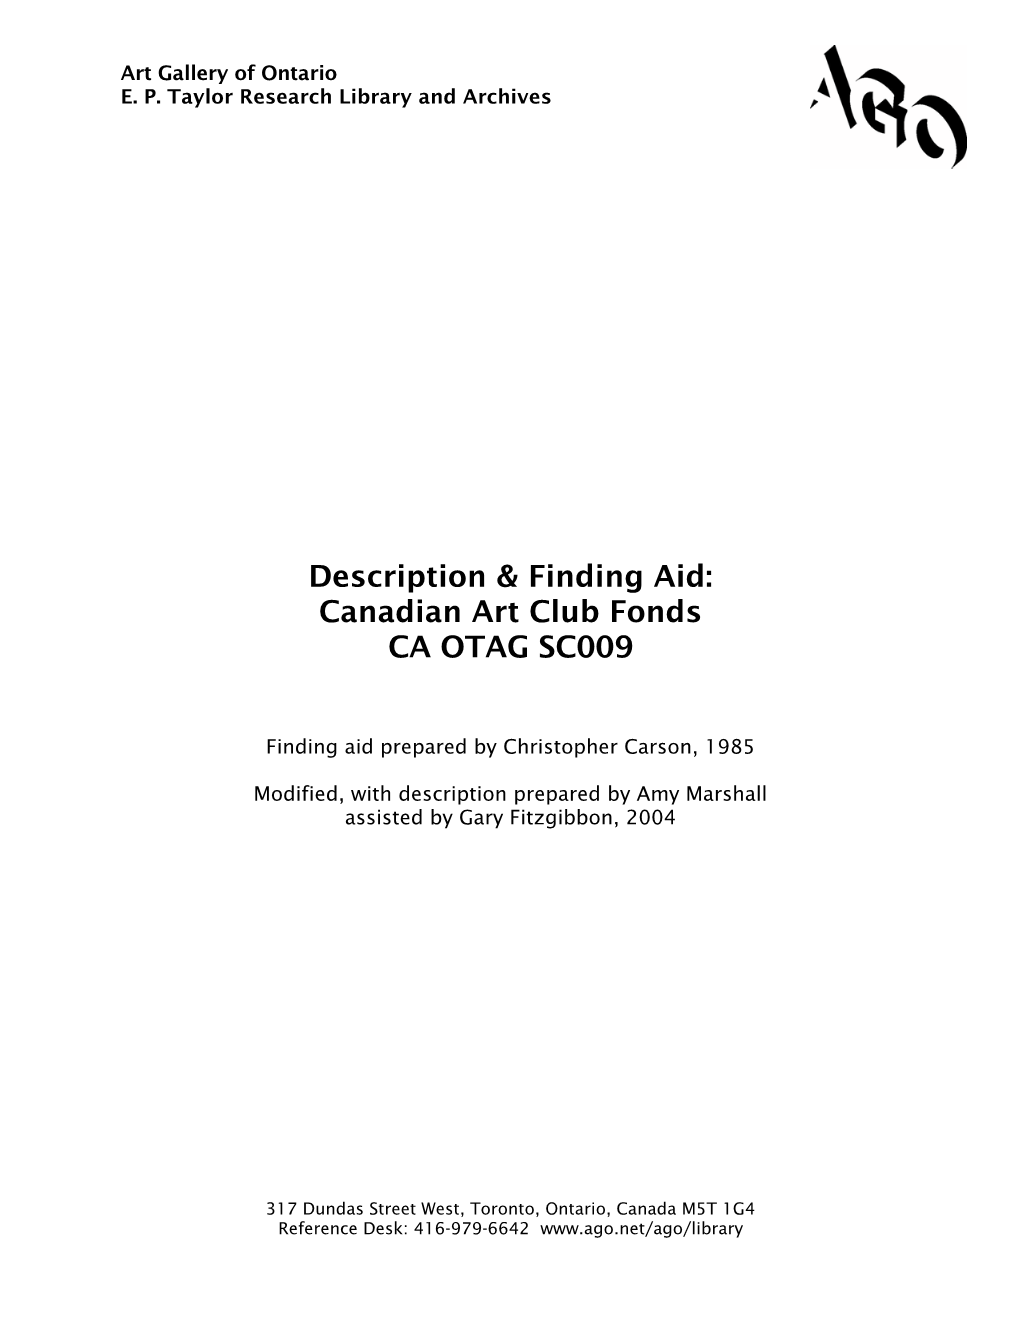 Description & Finding Aid: Canadian Art Club Fonds CA OTAG SC009